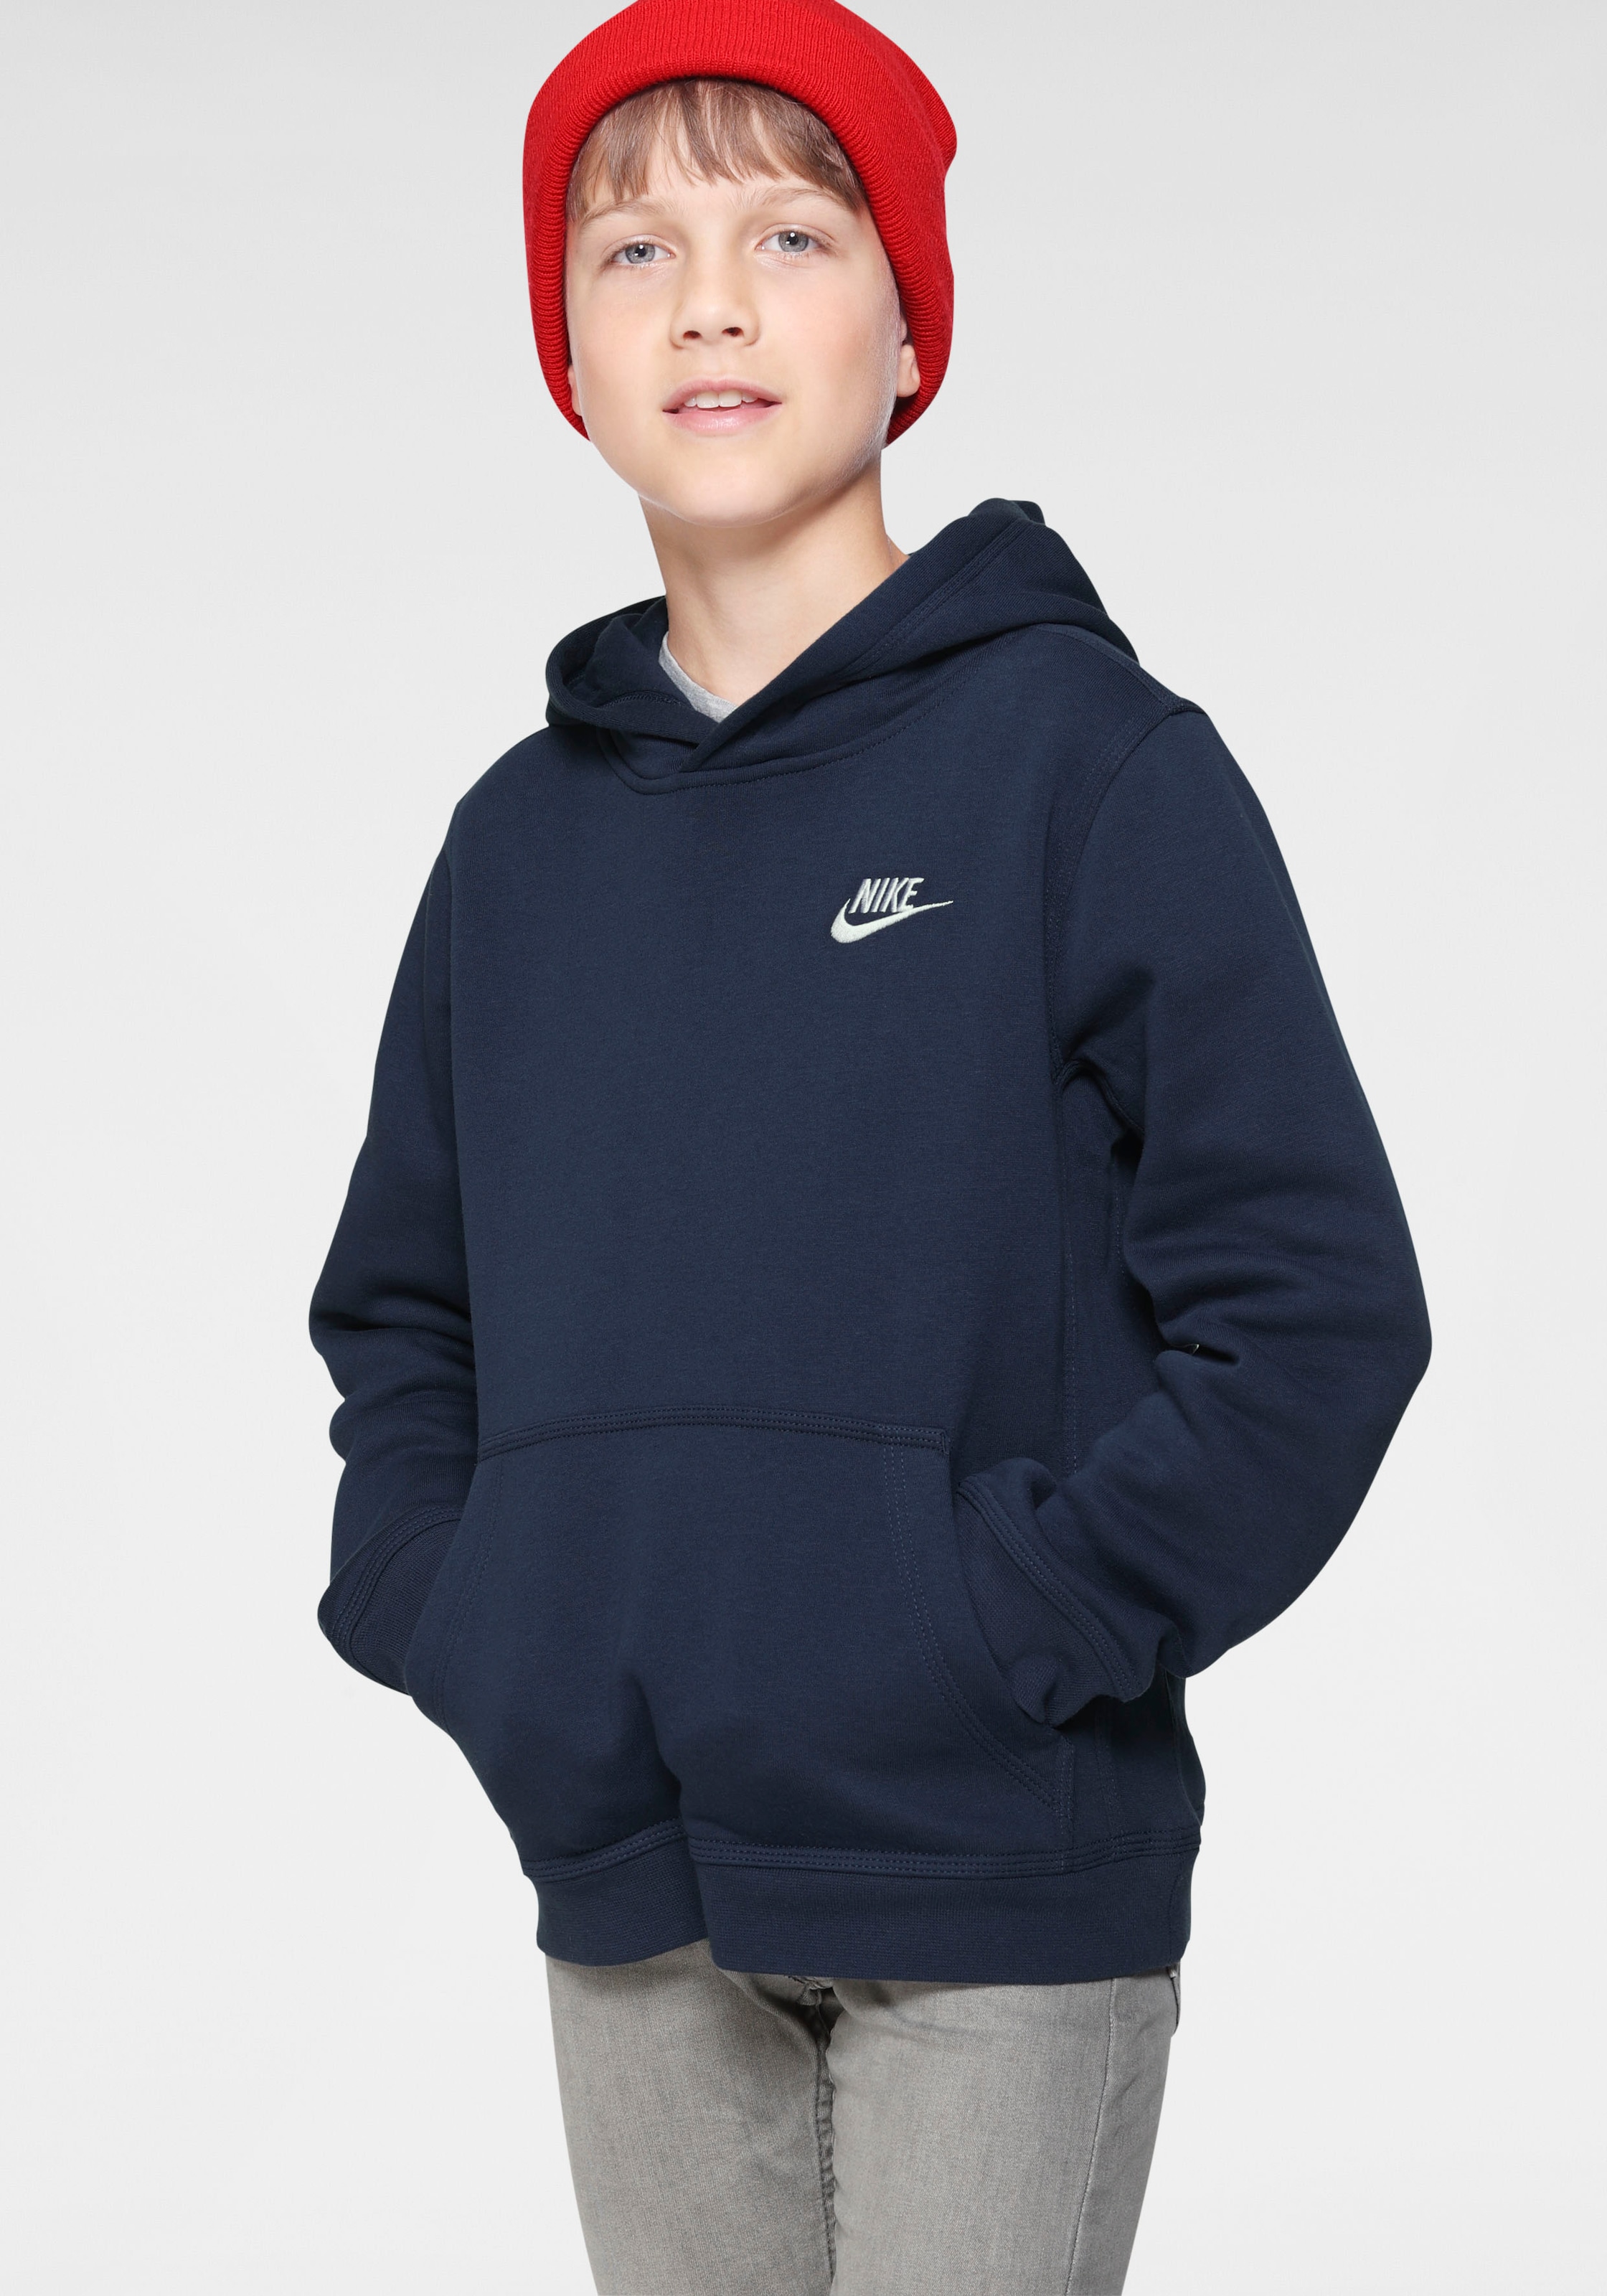 Kids\' kaufen Kapuzensweatshirt Big Sportswear »Club OTTO Pullover Hoodie« Nike bei